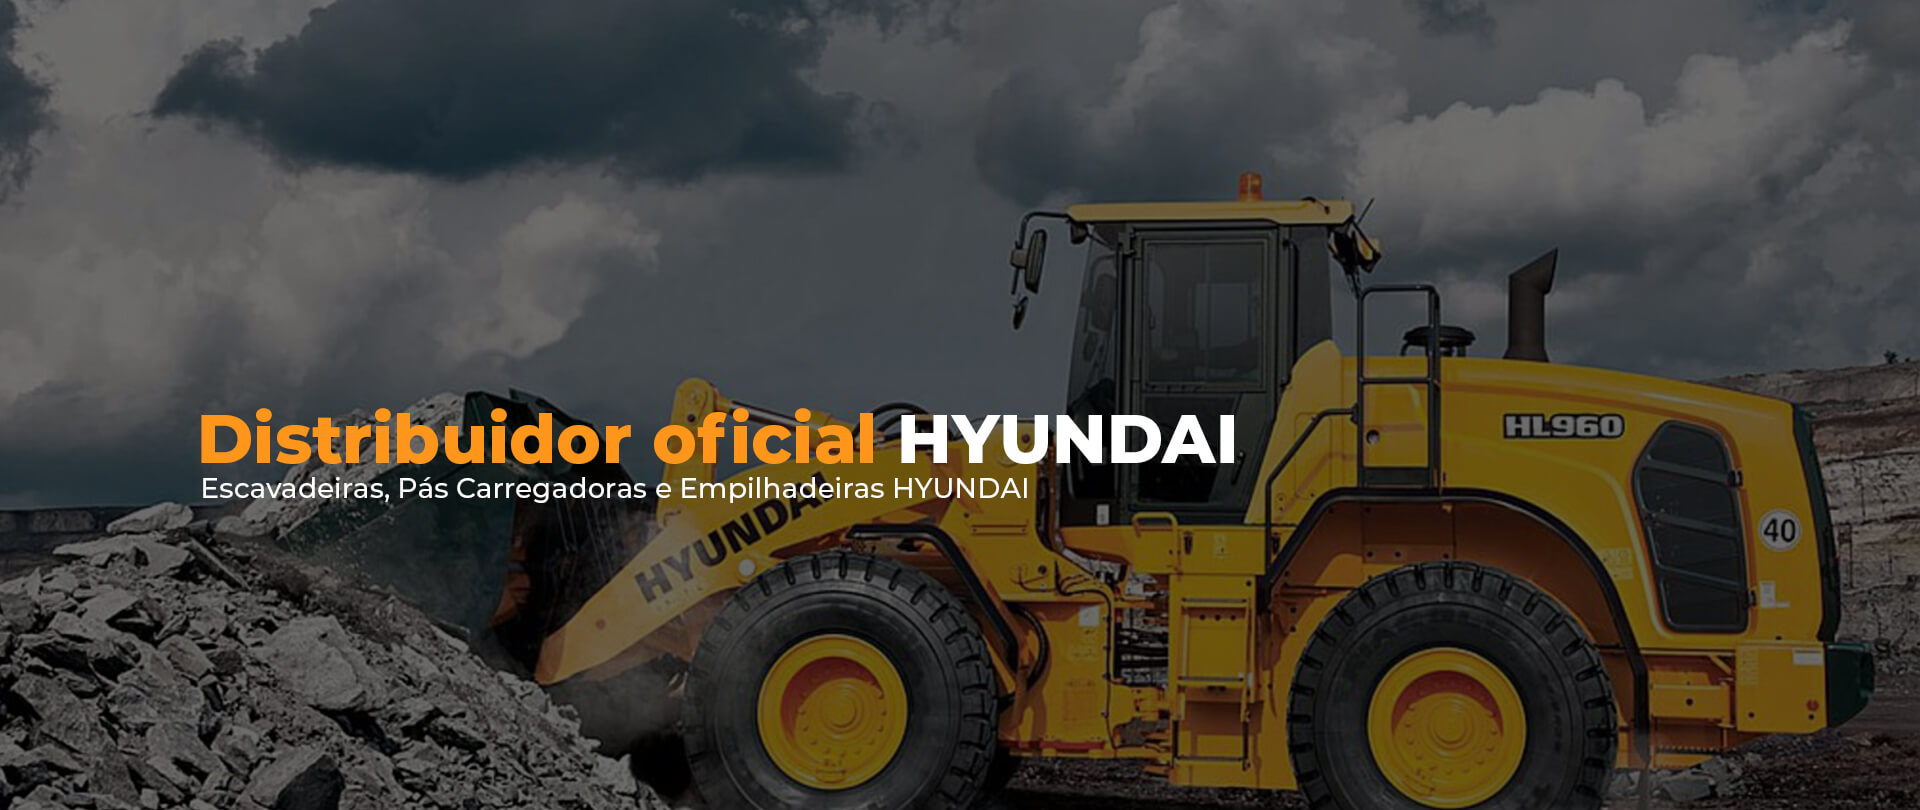 Distribuidor oficial HYUNDAI